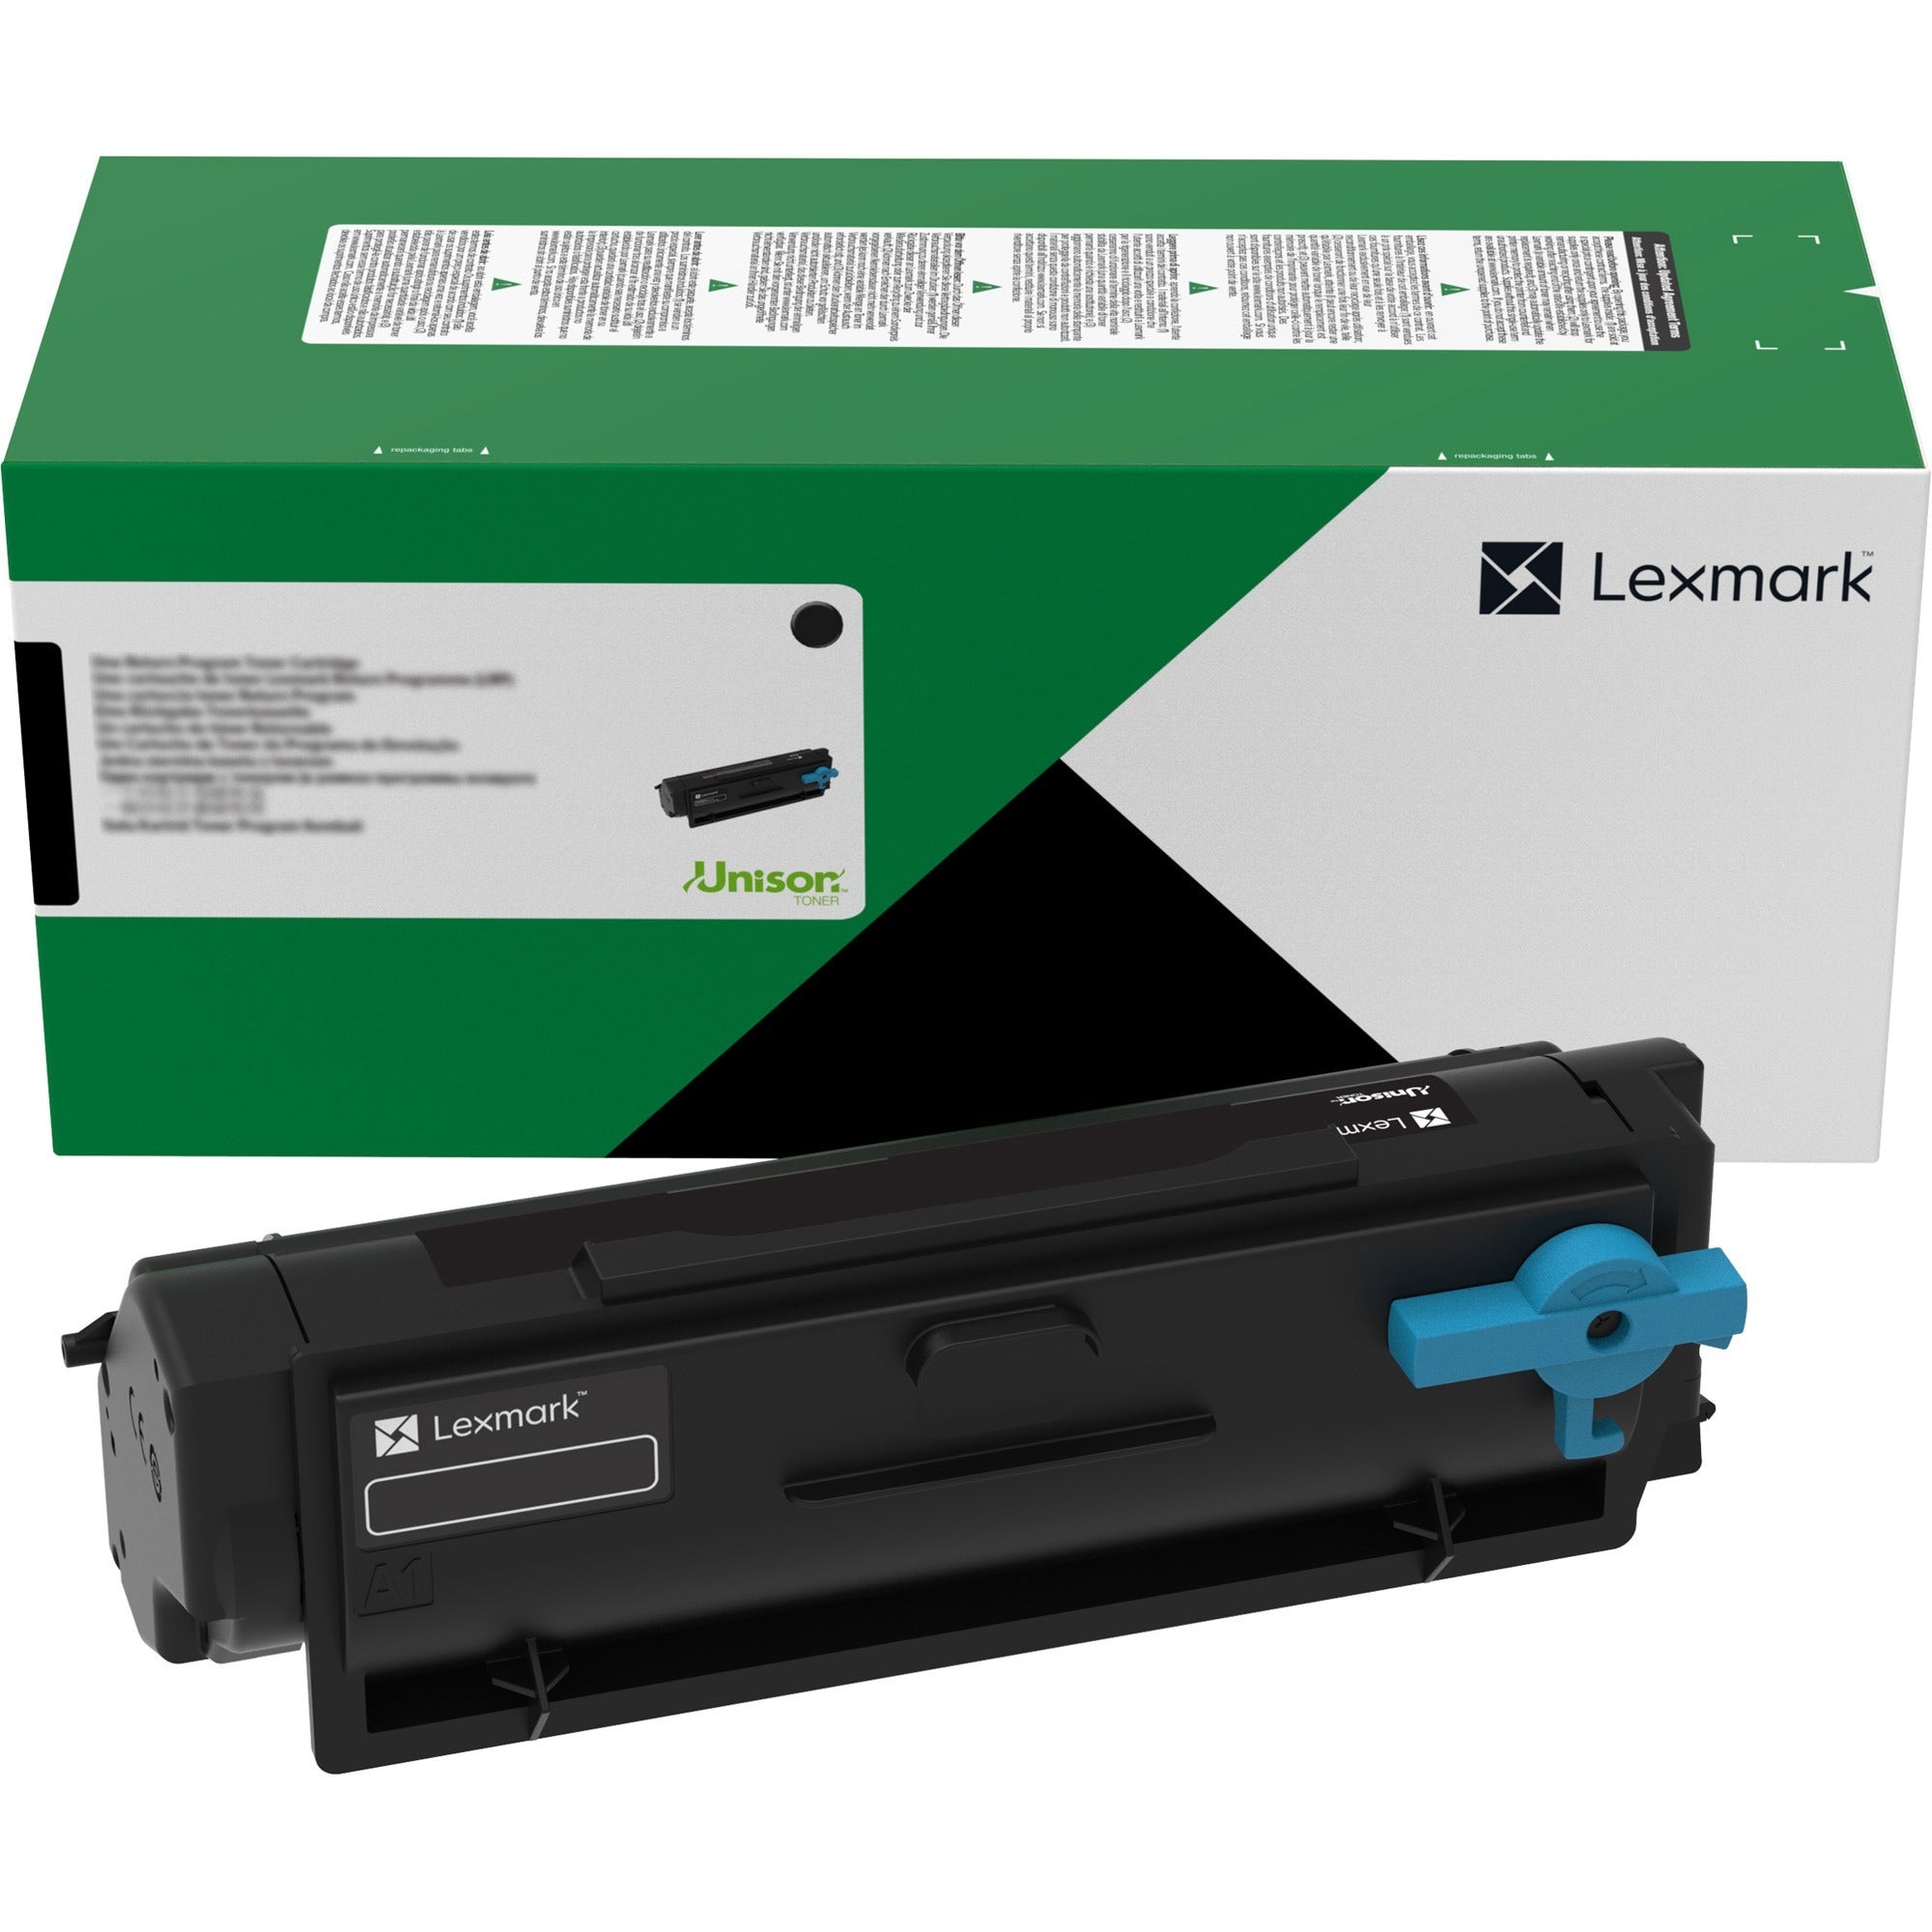 lexmark-unison-original-extra-high-yield-laser-toner-cartridge-black-1-pack-20000-pages_lex55b1x0e - 1